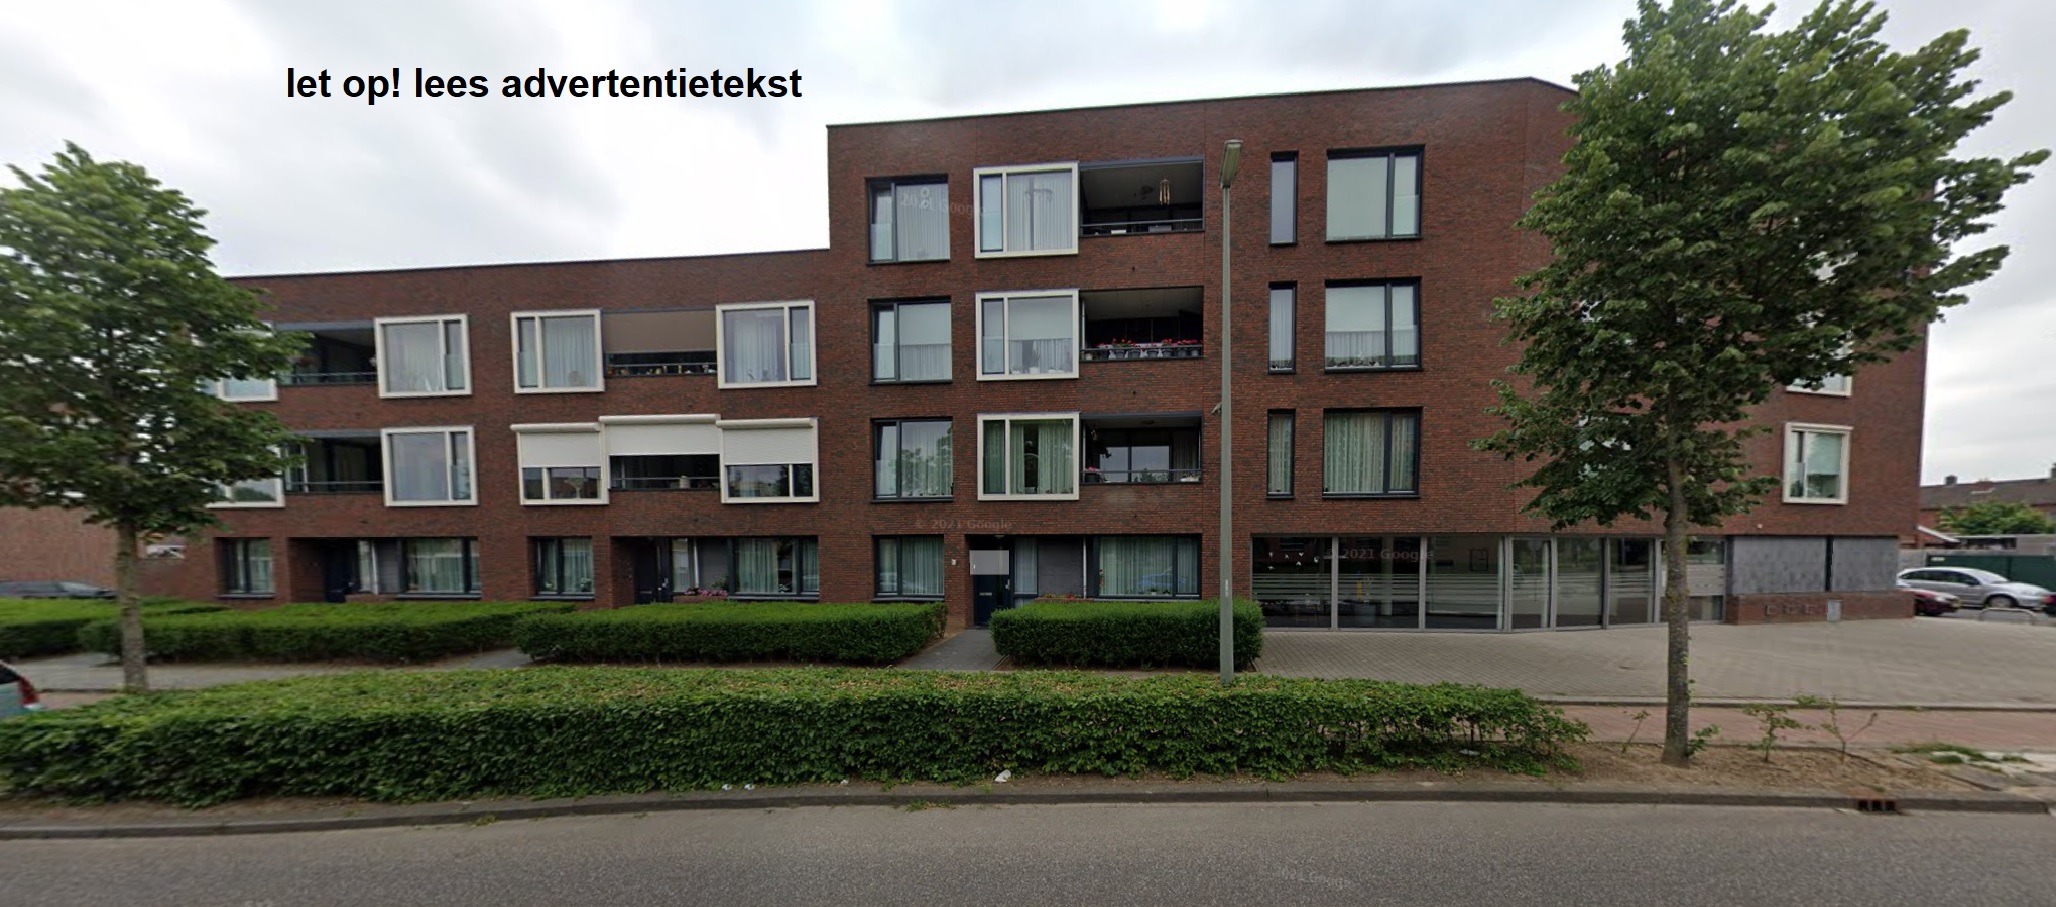 Karel Doormanstraat 85, 6045 EG Roermond, Nederland